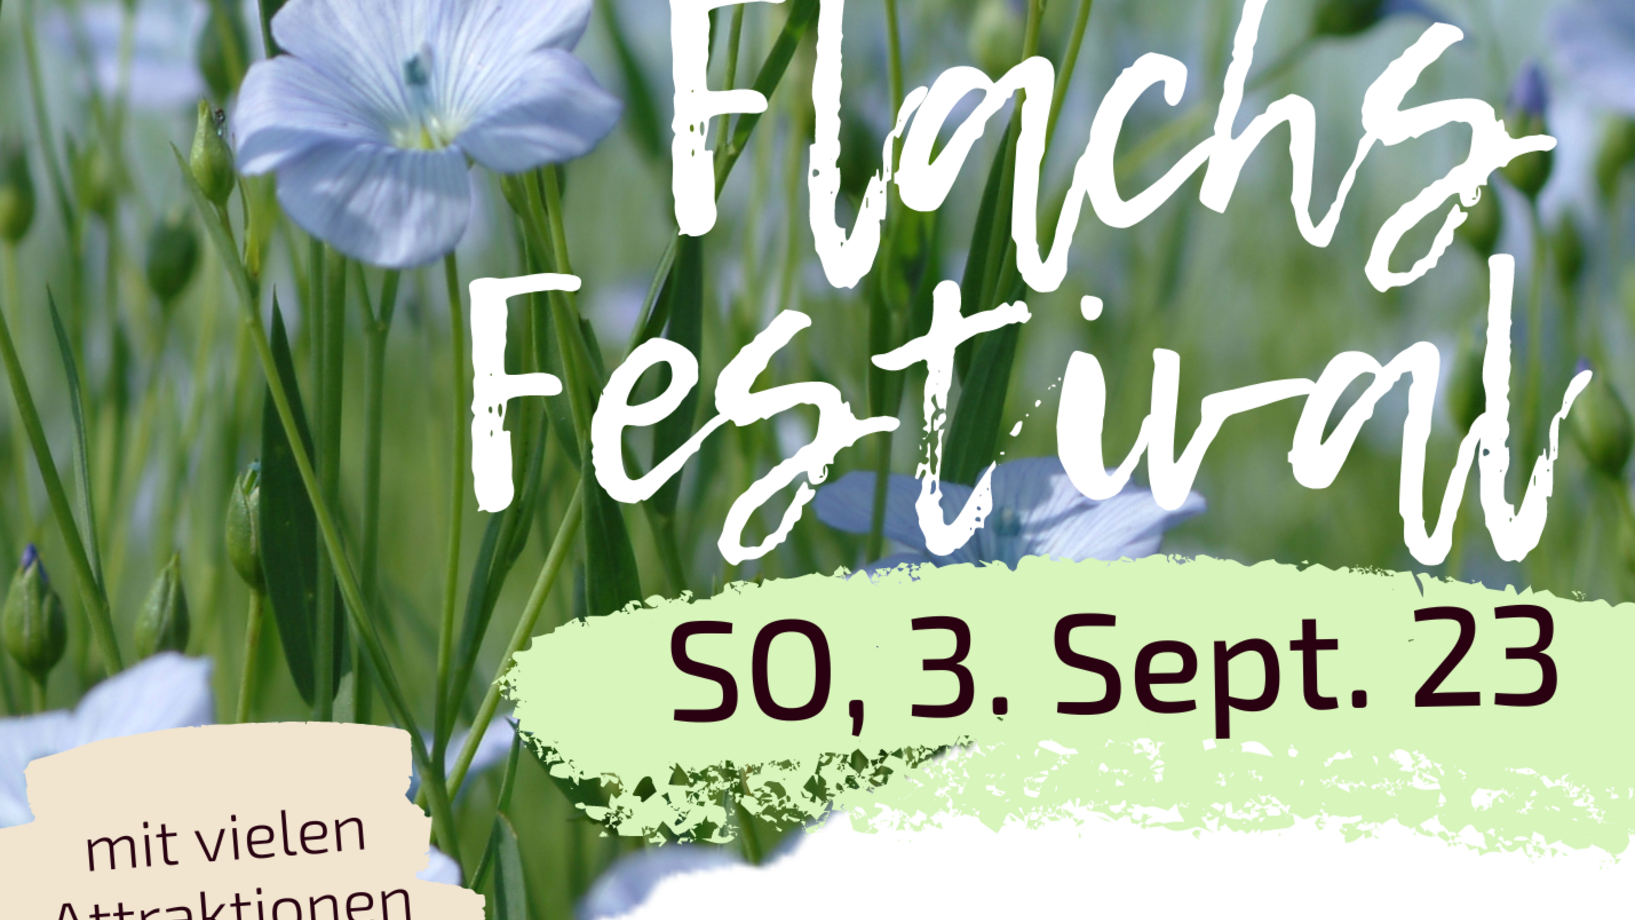 Flyer Flachsfestival